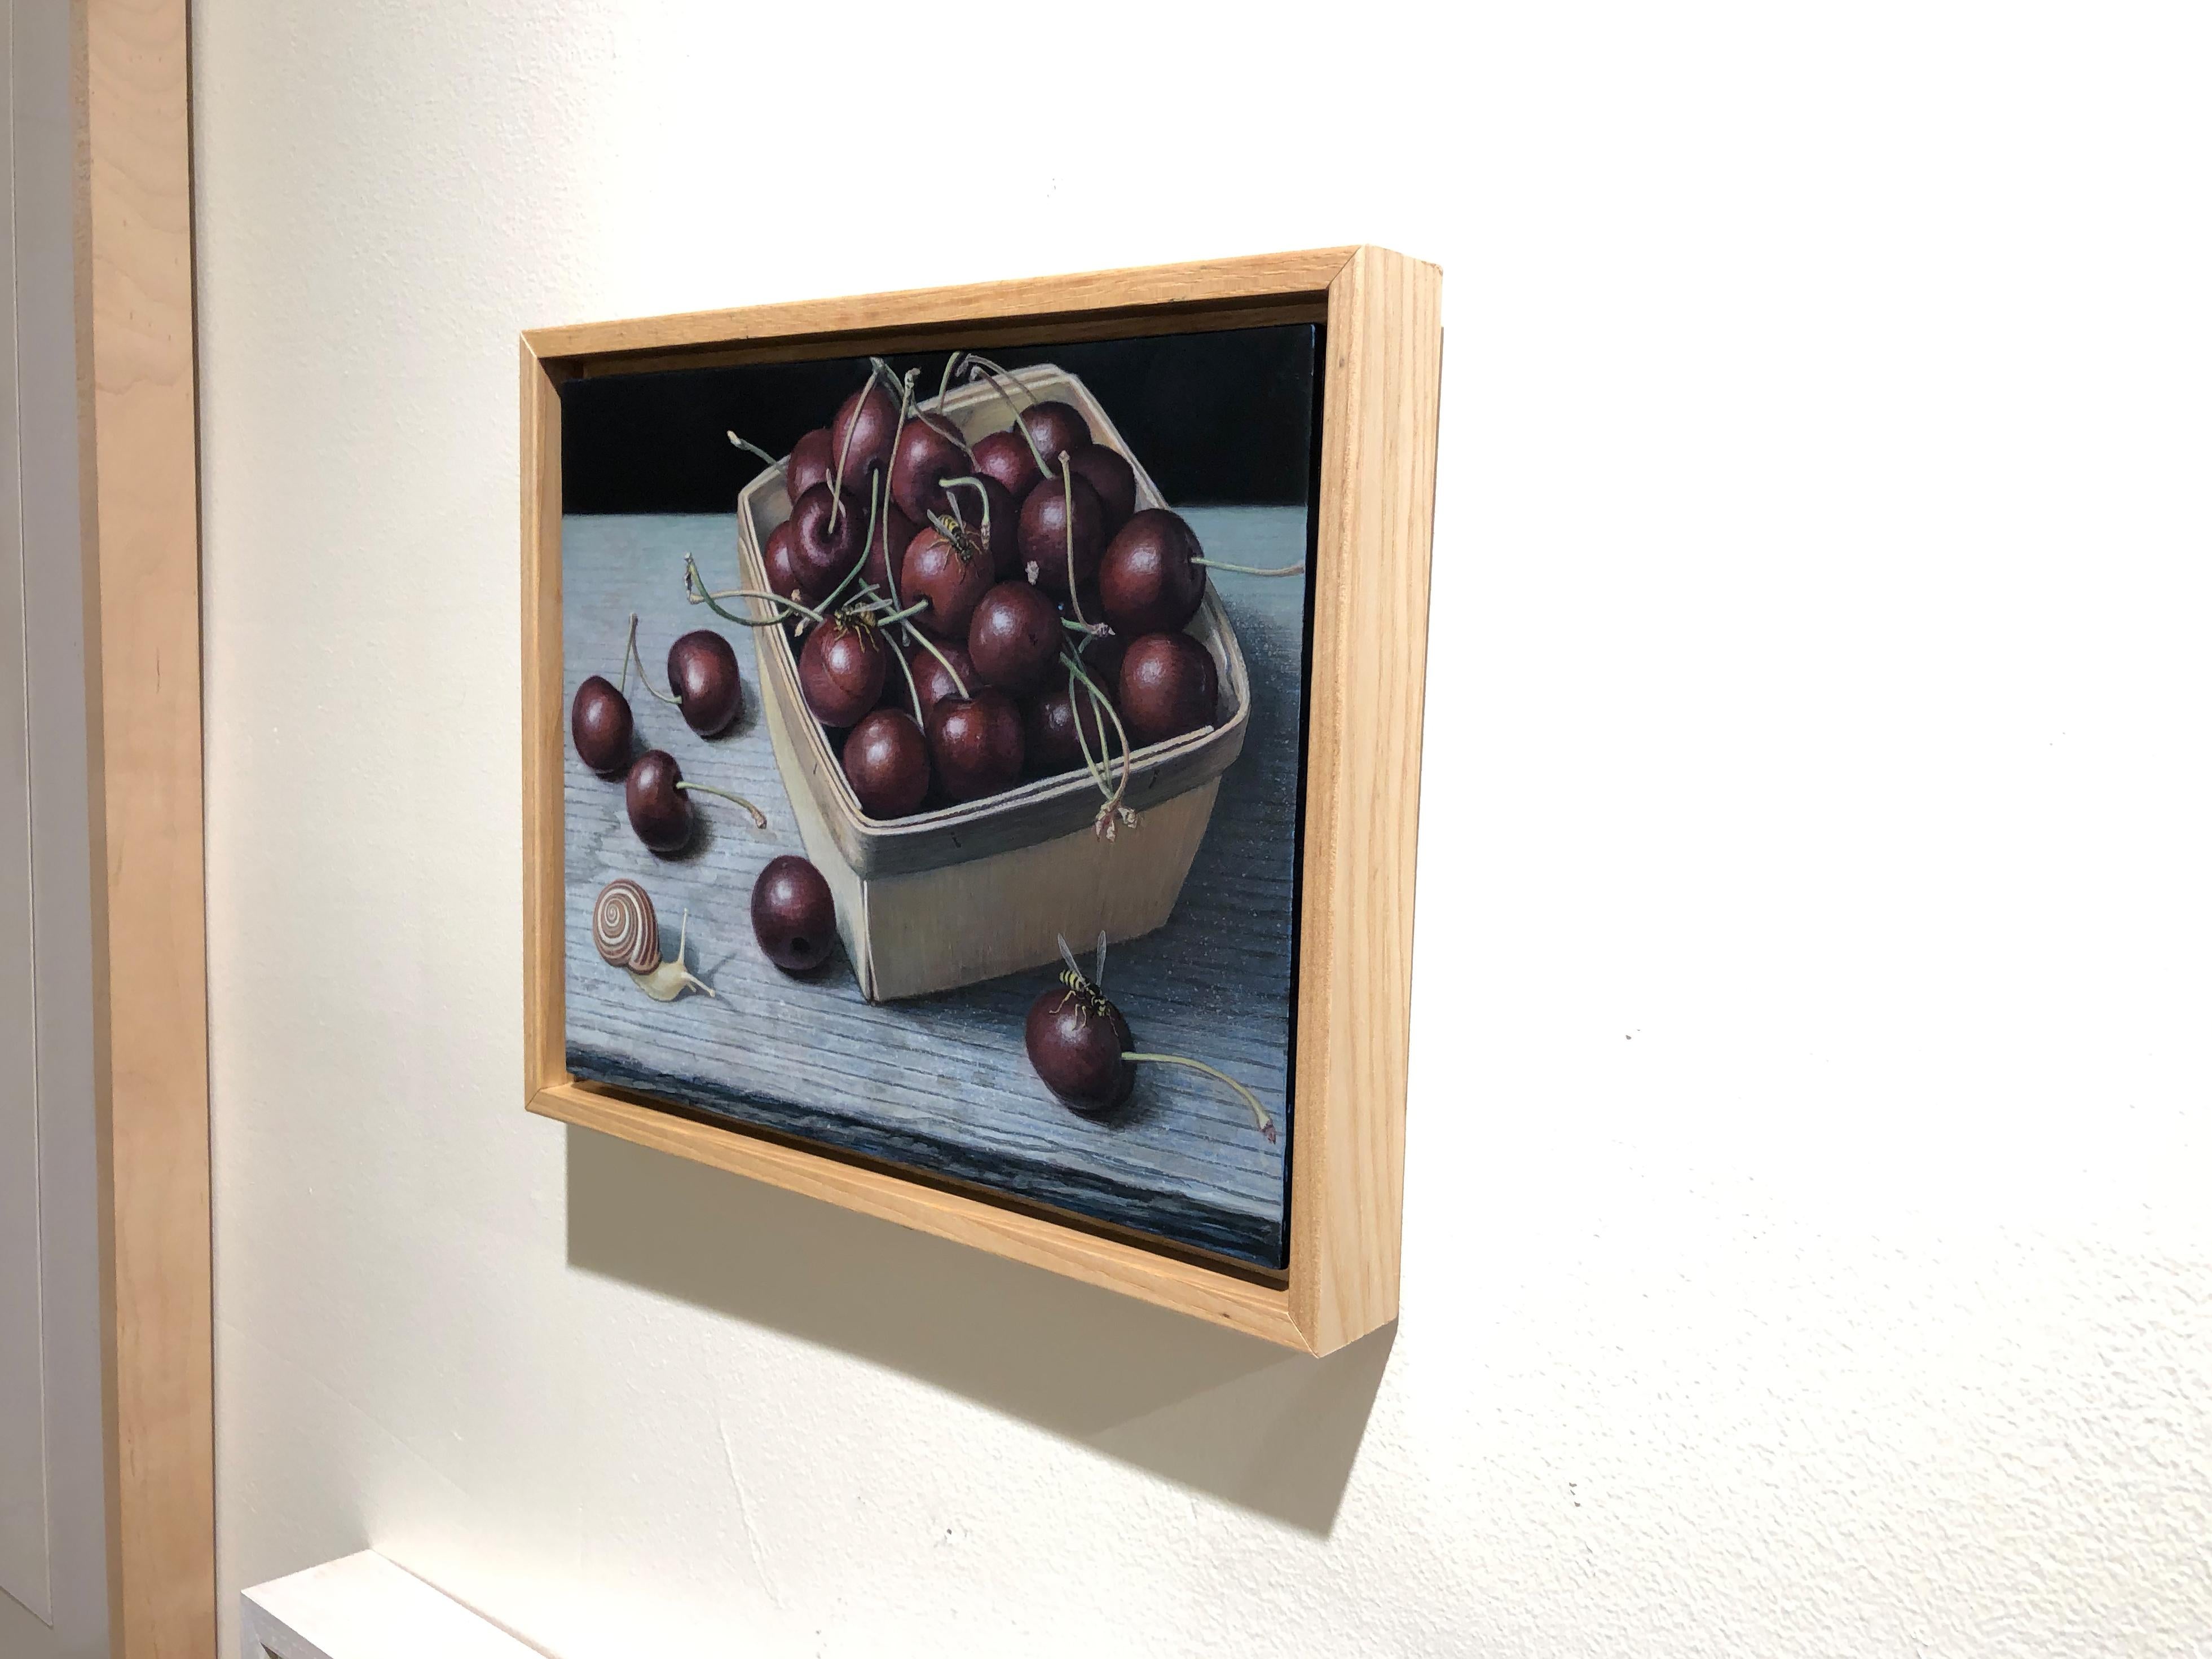 Bing Cherries in a Pint Basket, surreal egg tempera still life painting, 2020 - Black Animal Painting by Douglas Safranek